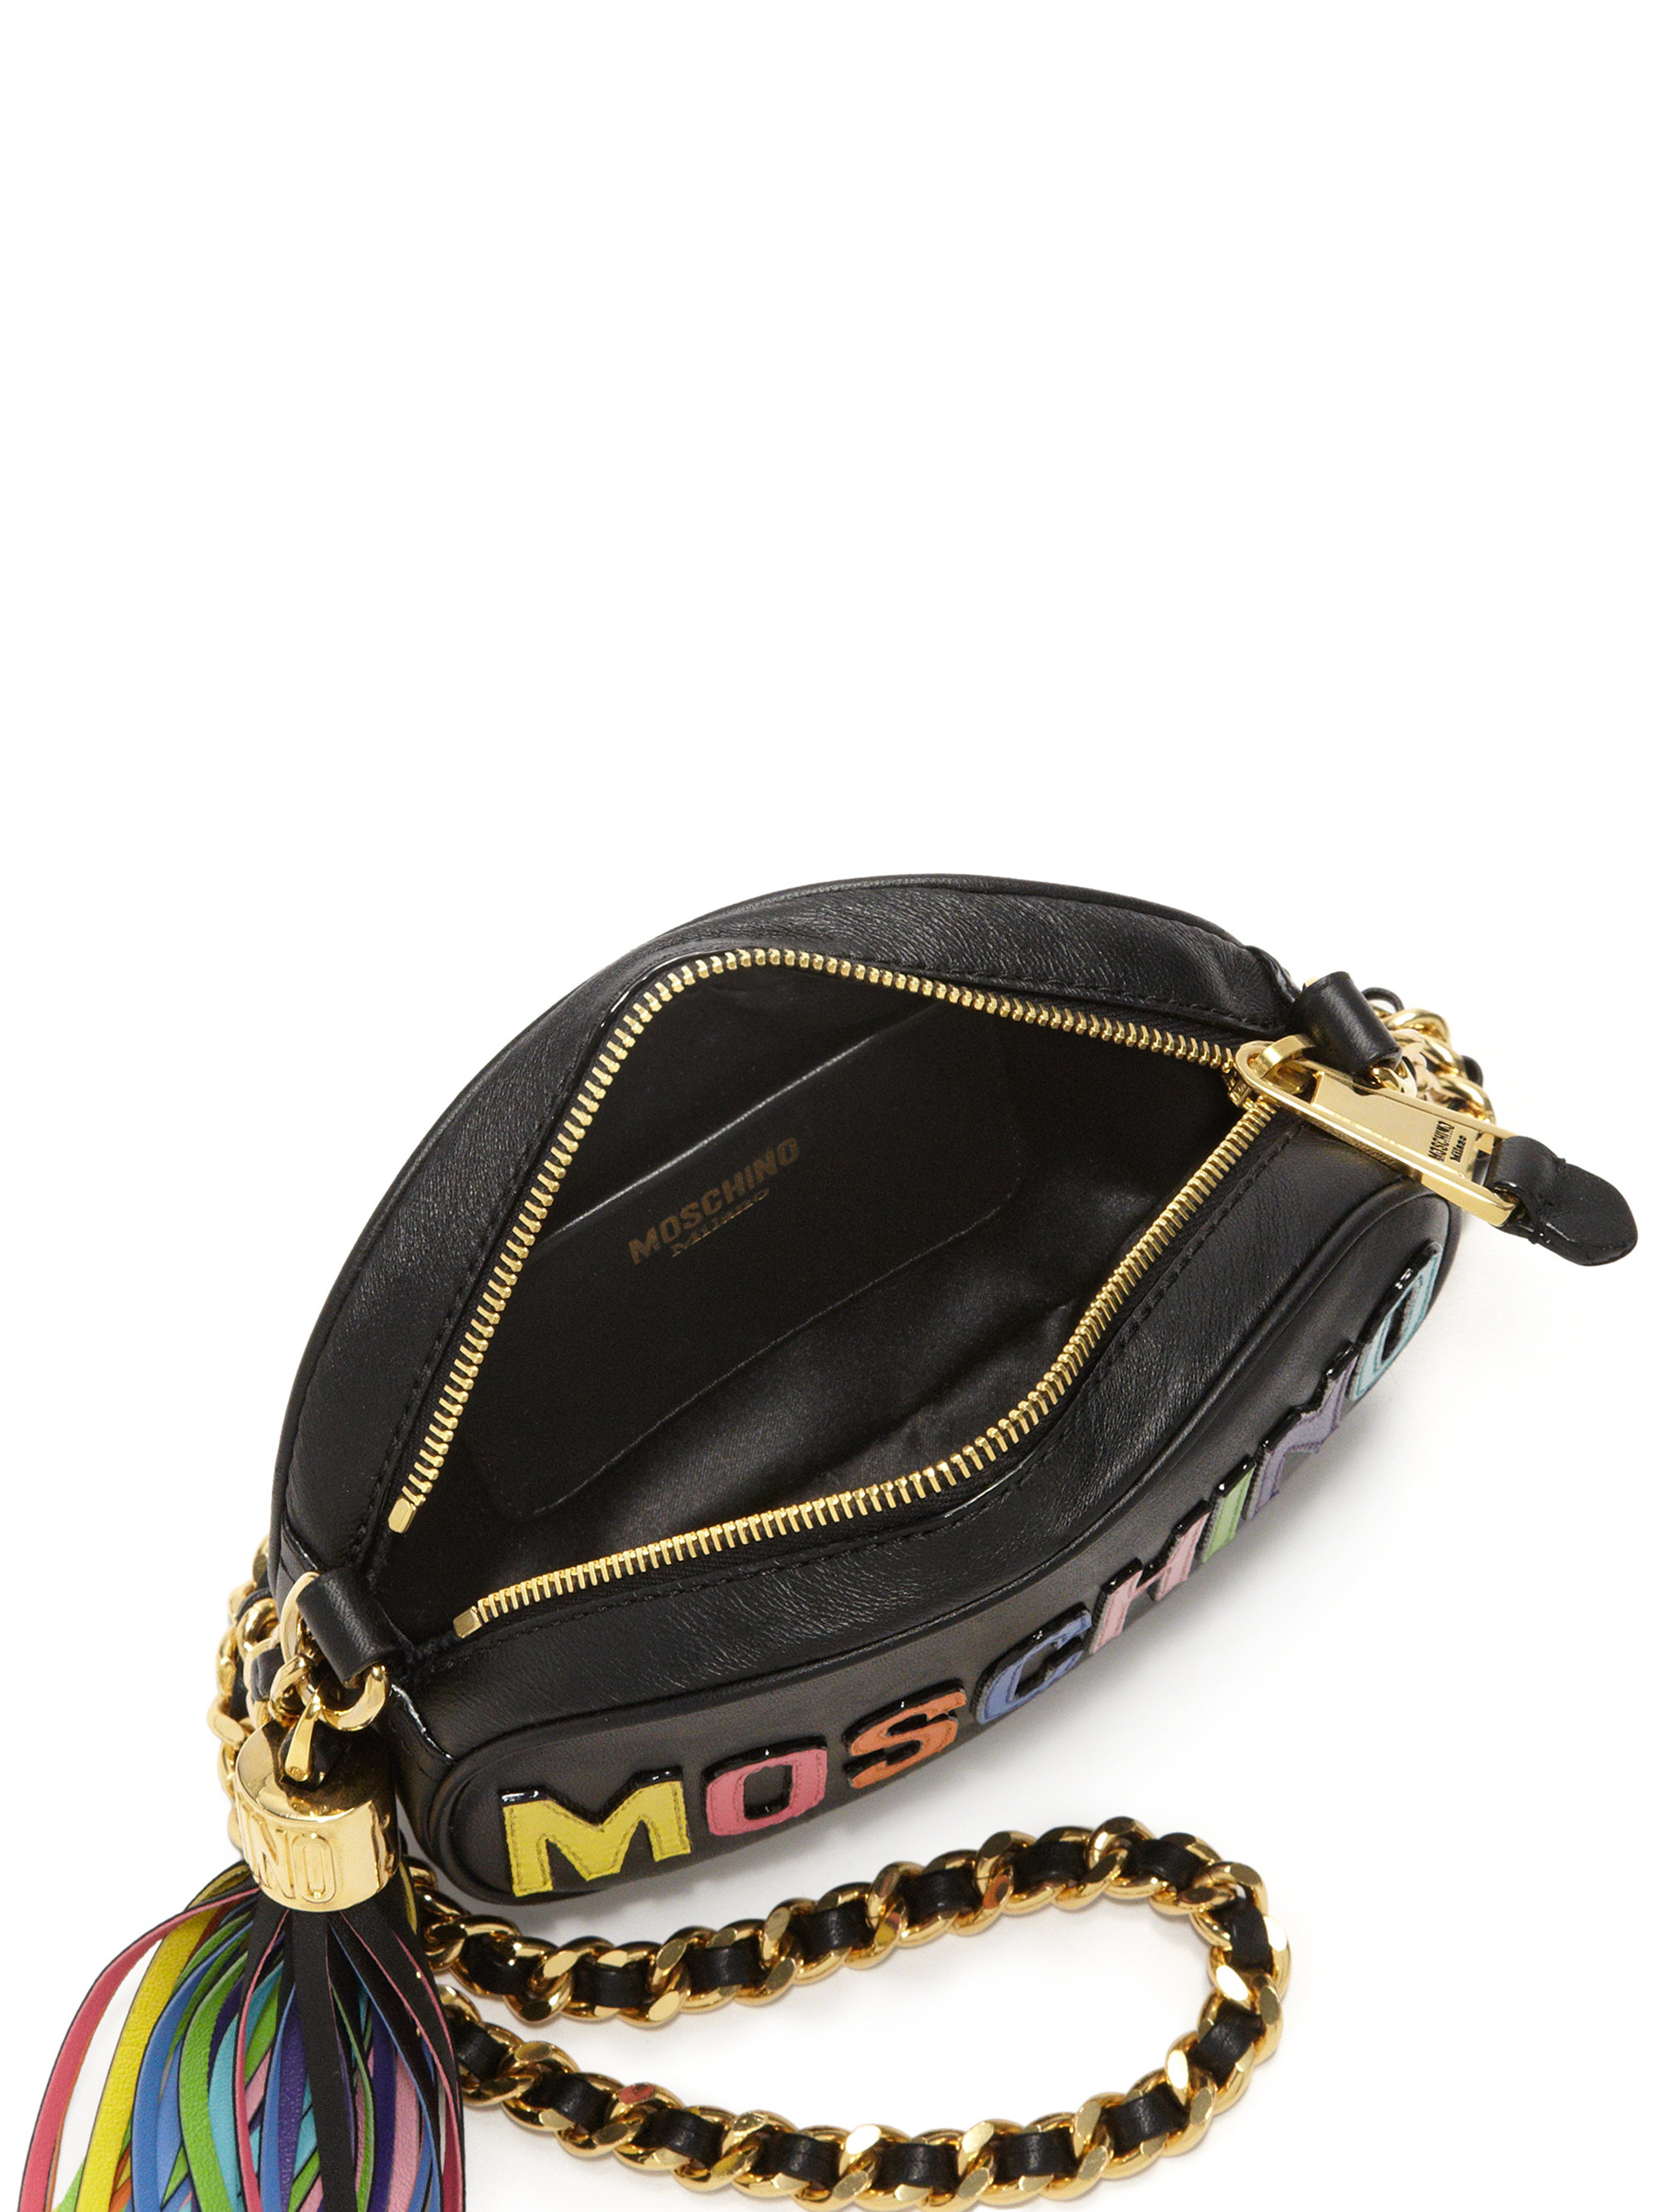 Lyst - Moschino Logo Chain-Strap Crossbody Bag in Black